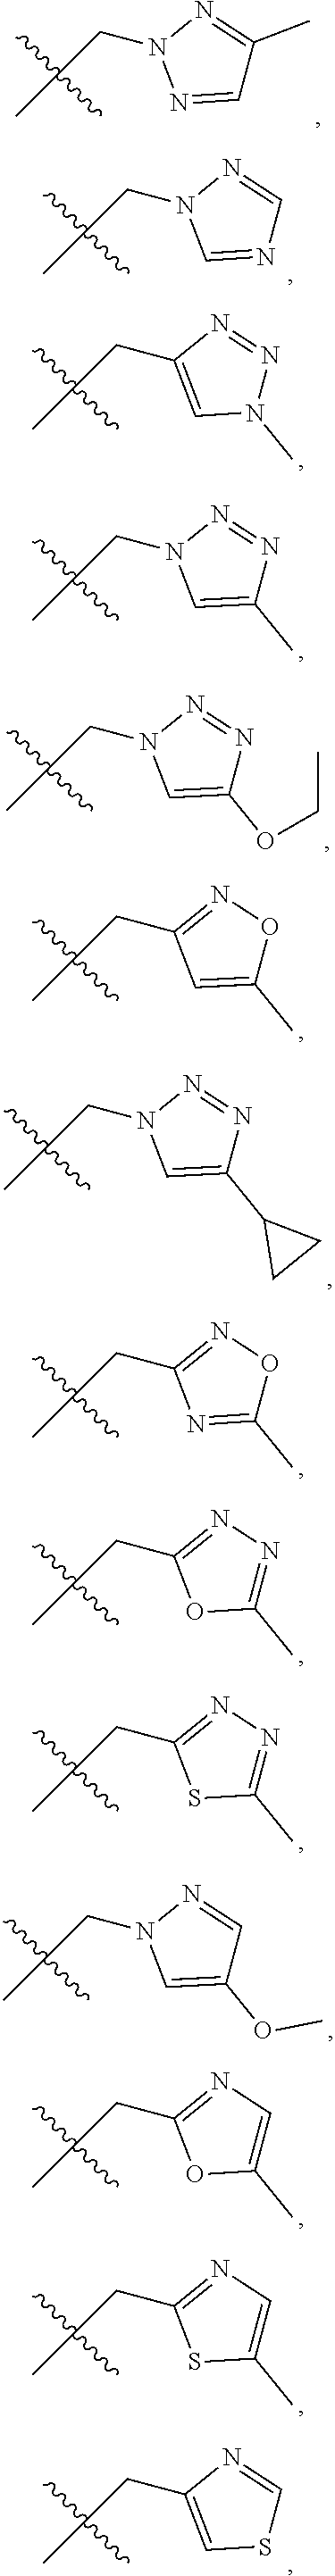 Novel imidazo[4,5-c]quinoline derivatives as lrrk2 inhibitors